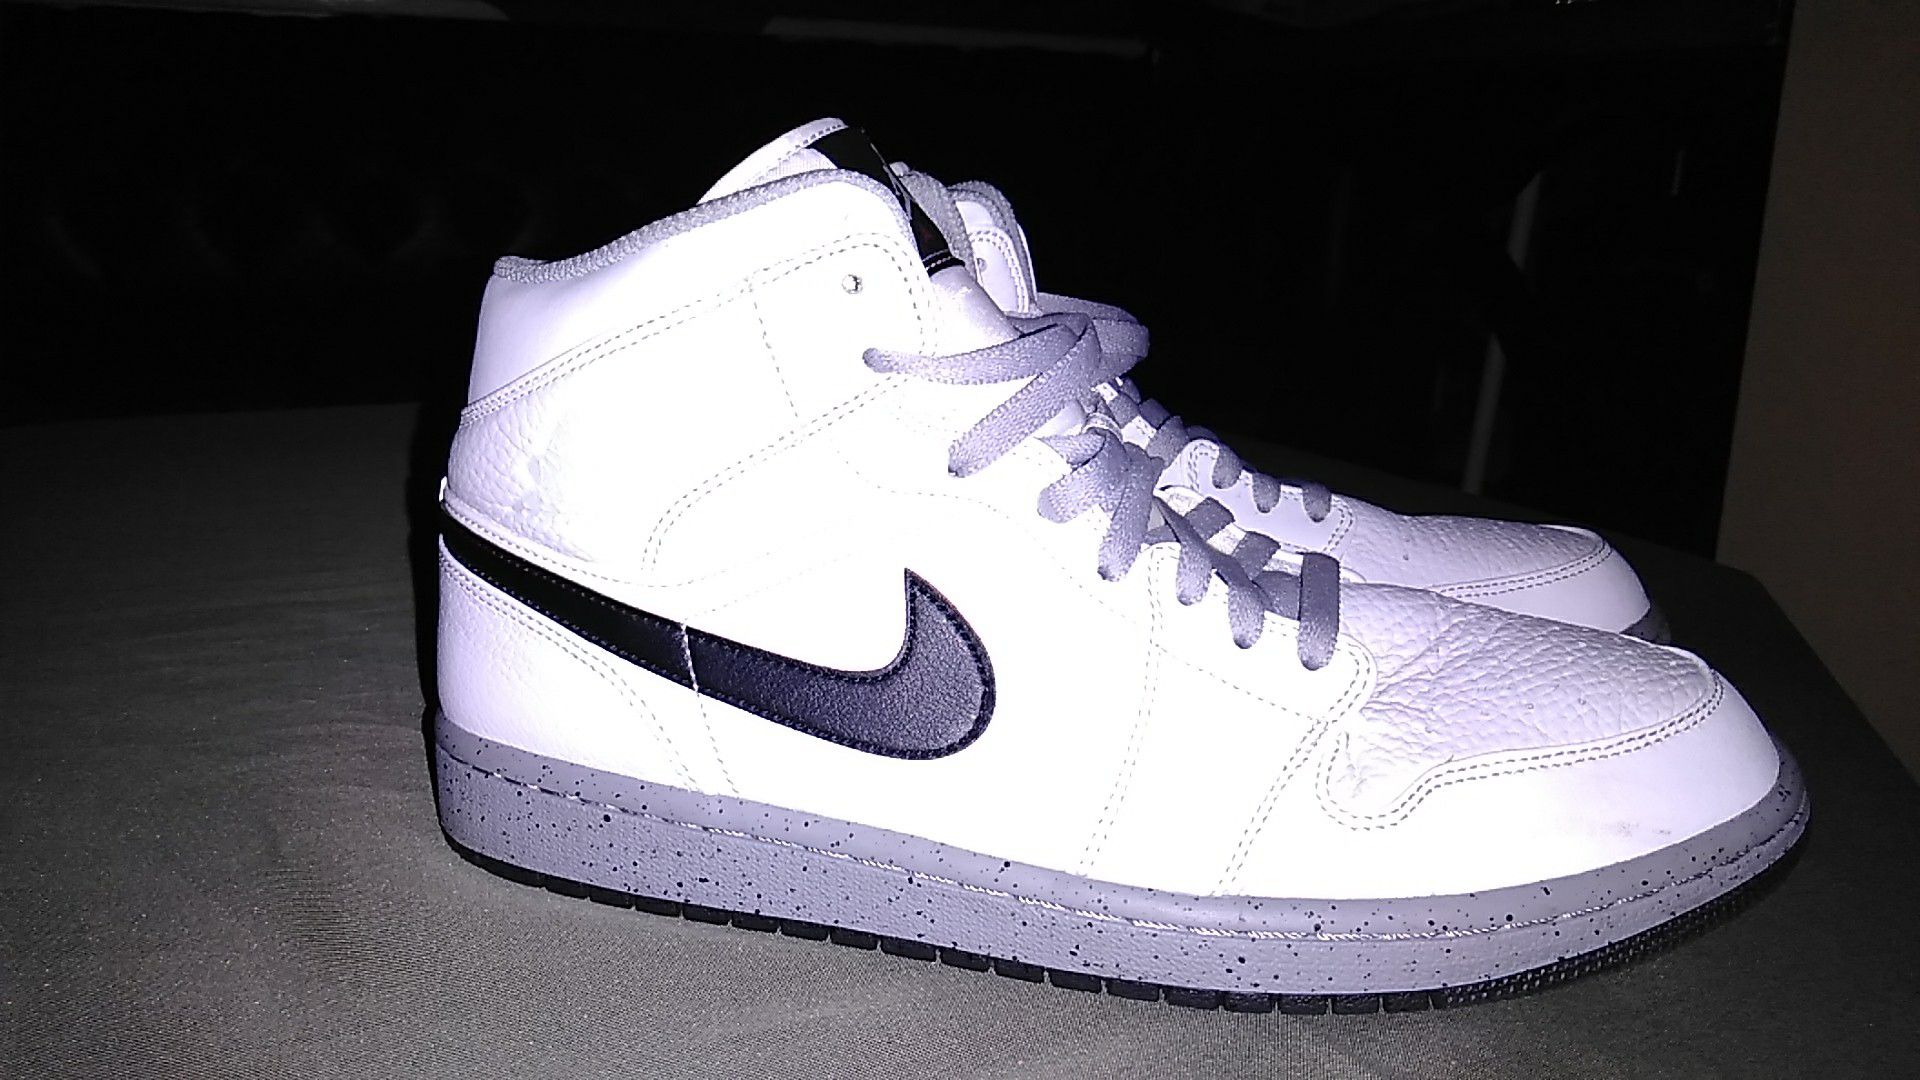 Nike Jordan Air White, Grey & Black Size 11